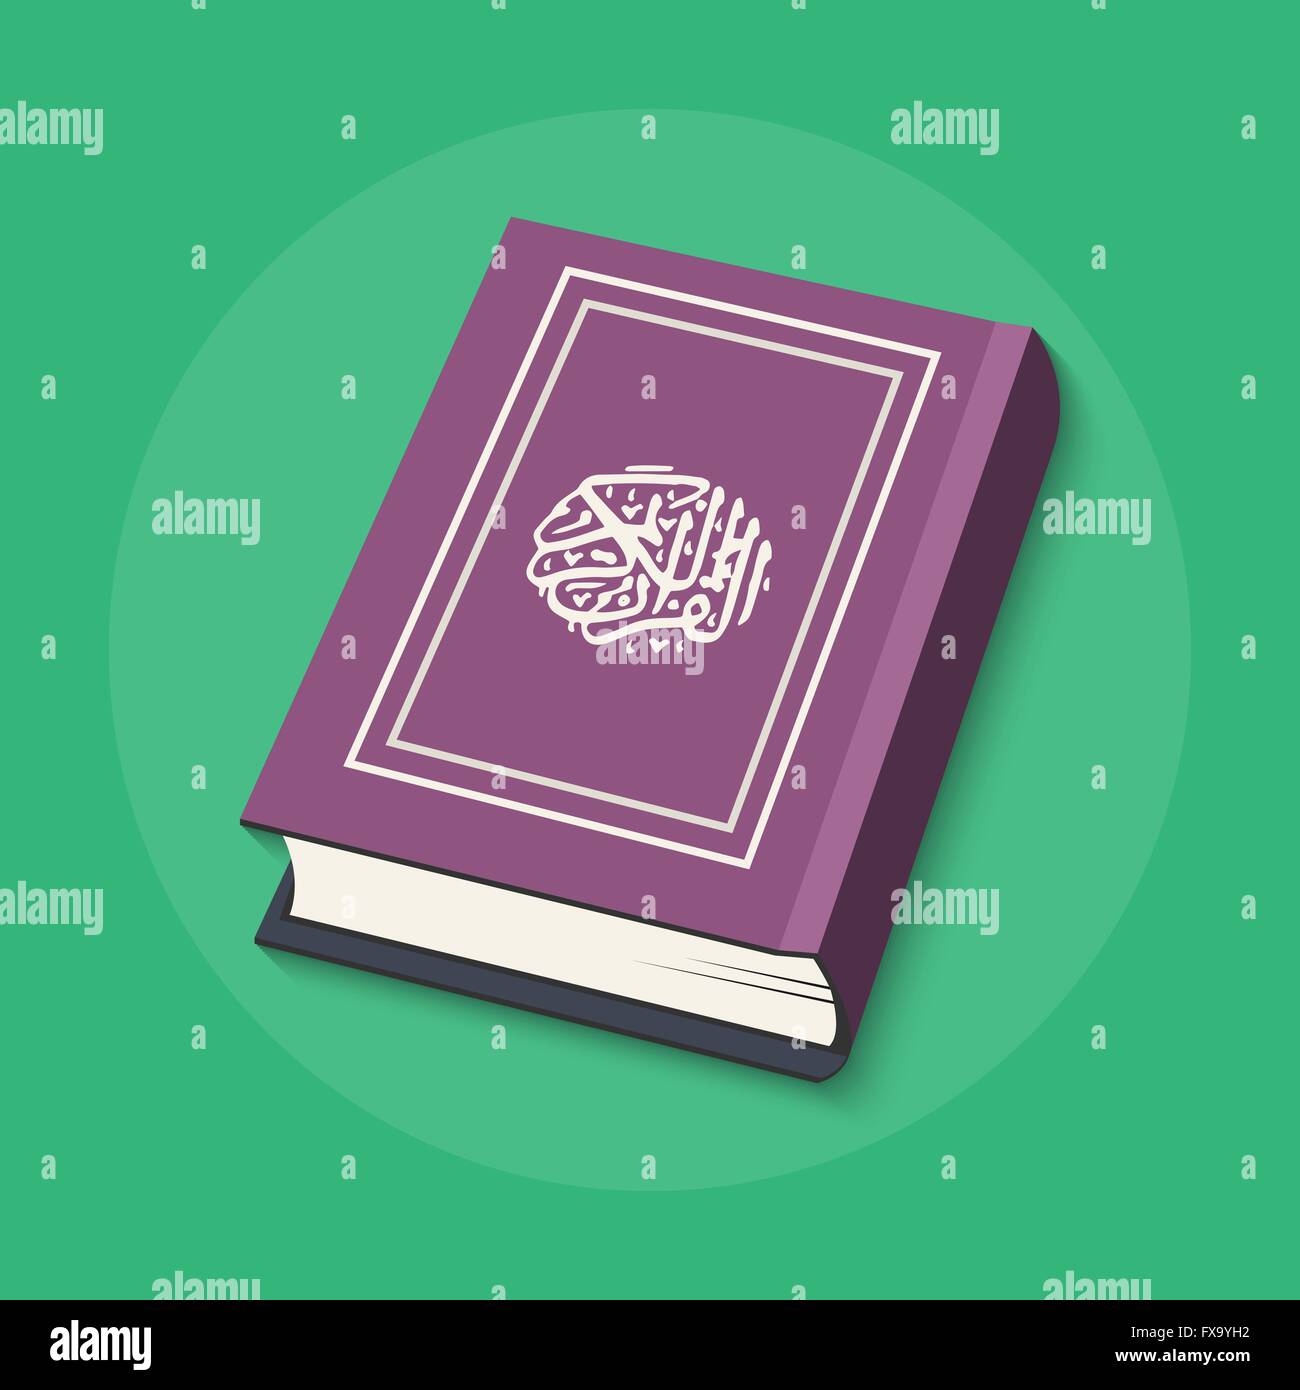 Vector illustration de livre islamique coran avec la calligraphie arabe qui signifie Al-Quran, le Saint Coran Illustration de Vecteur